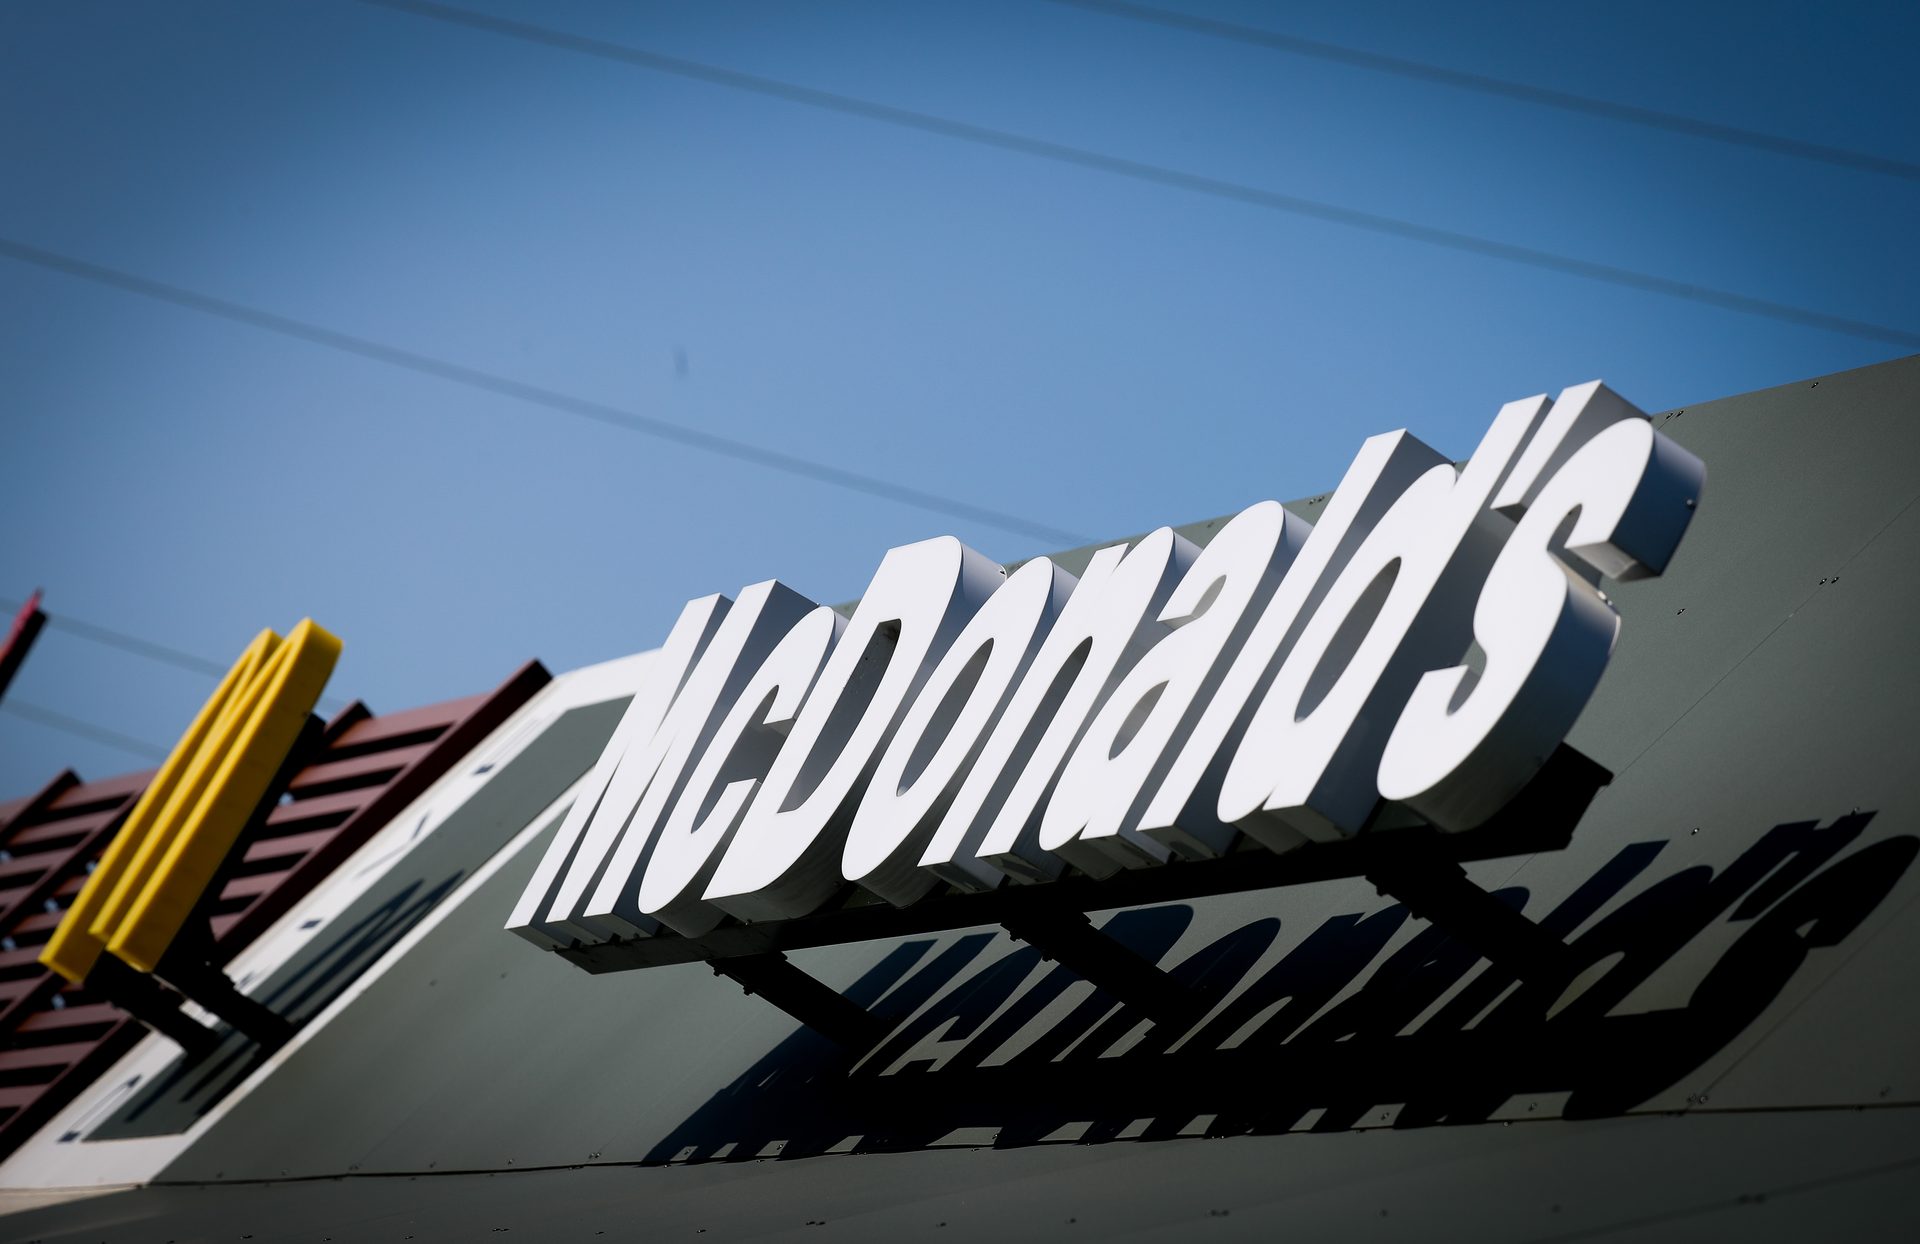 Not loving it: Locals furious over McDonald's planned new restaurant in Tervuren